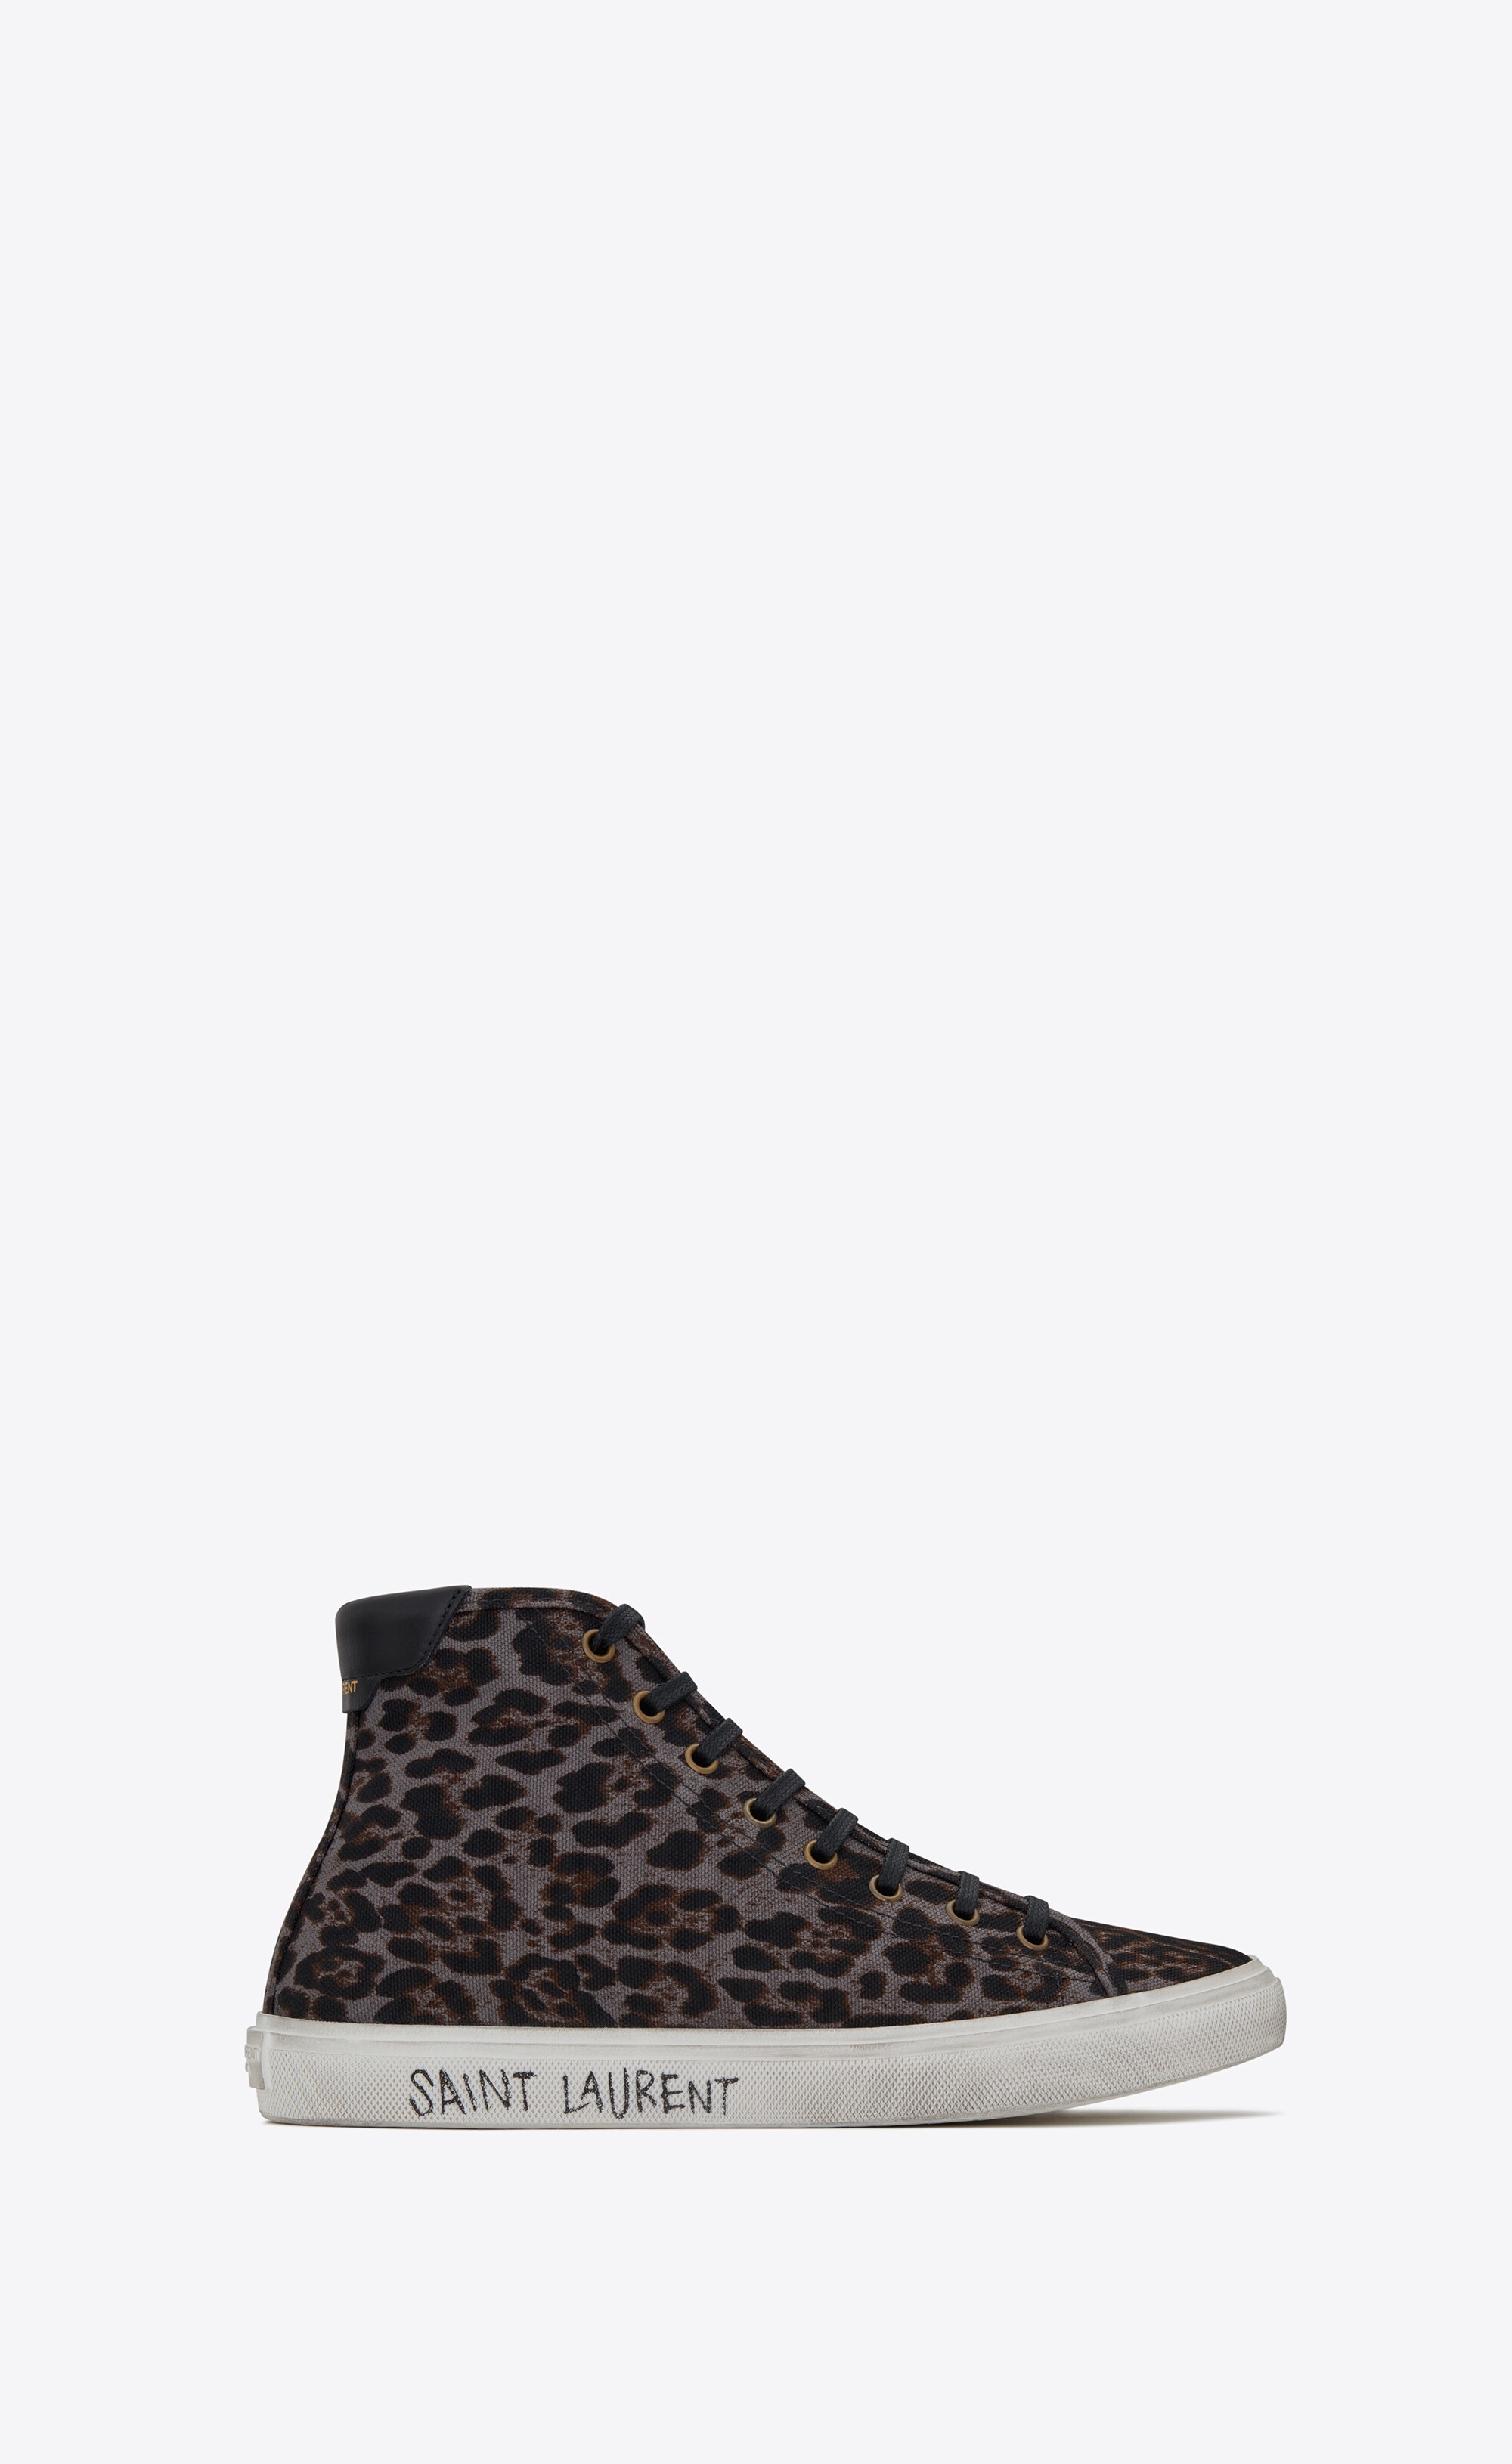 ysl leopard shoes